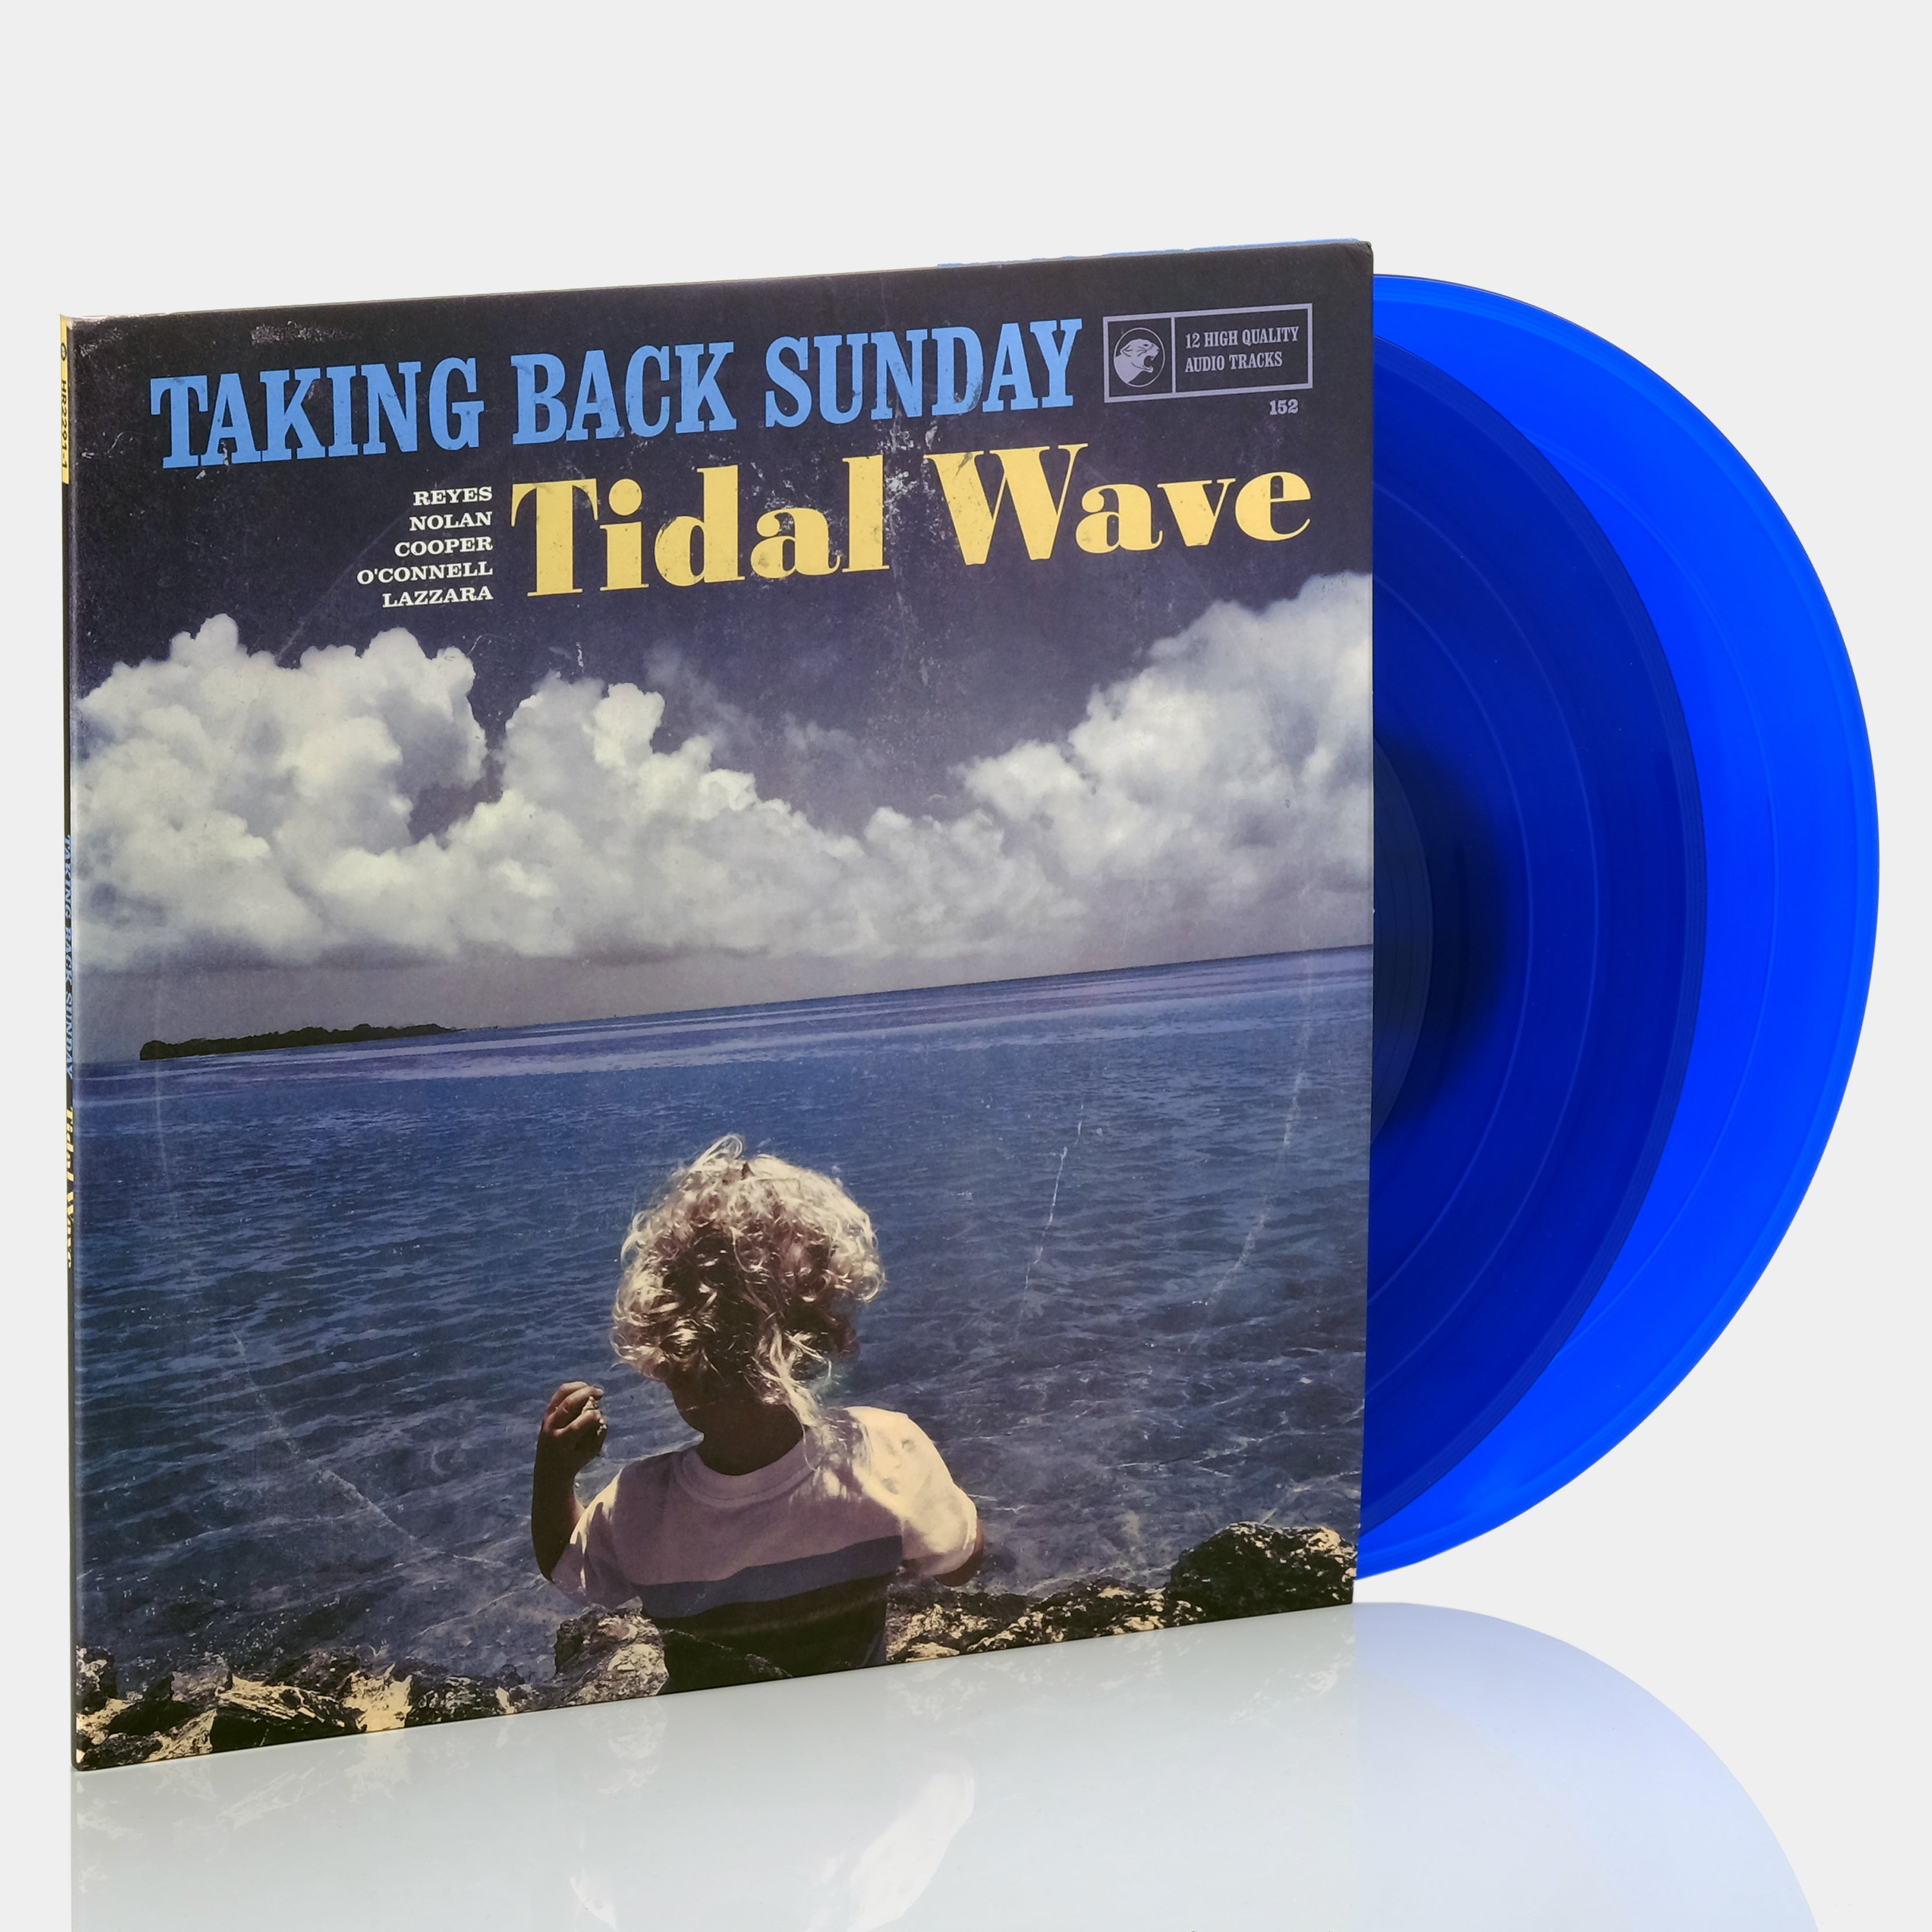 Taking Back Sunday - Tidal Wave 2xLP Blue Vinyl Record